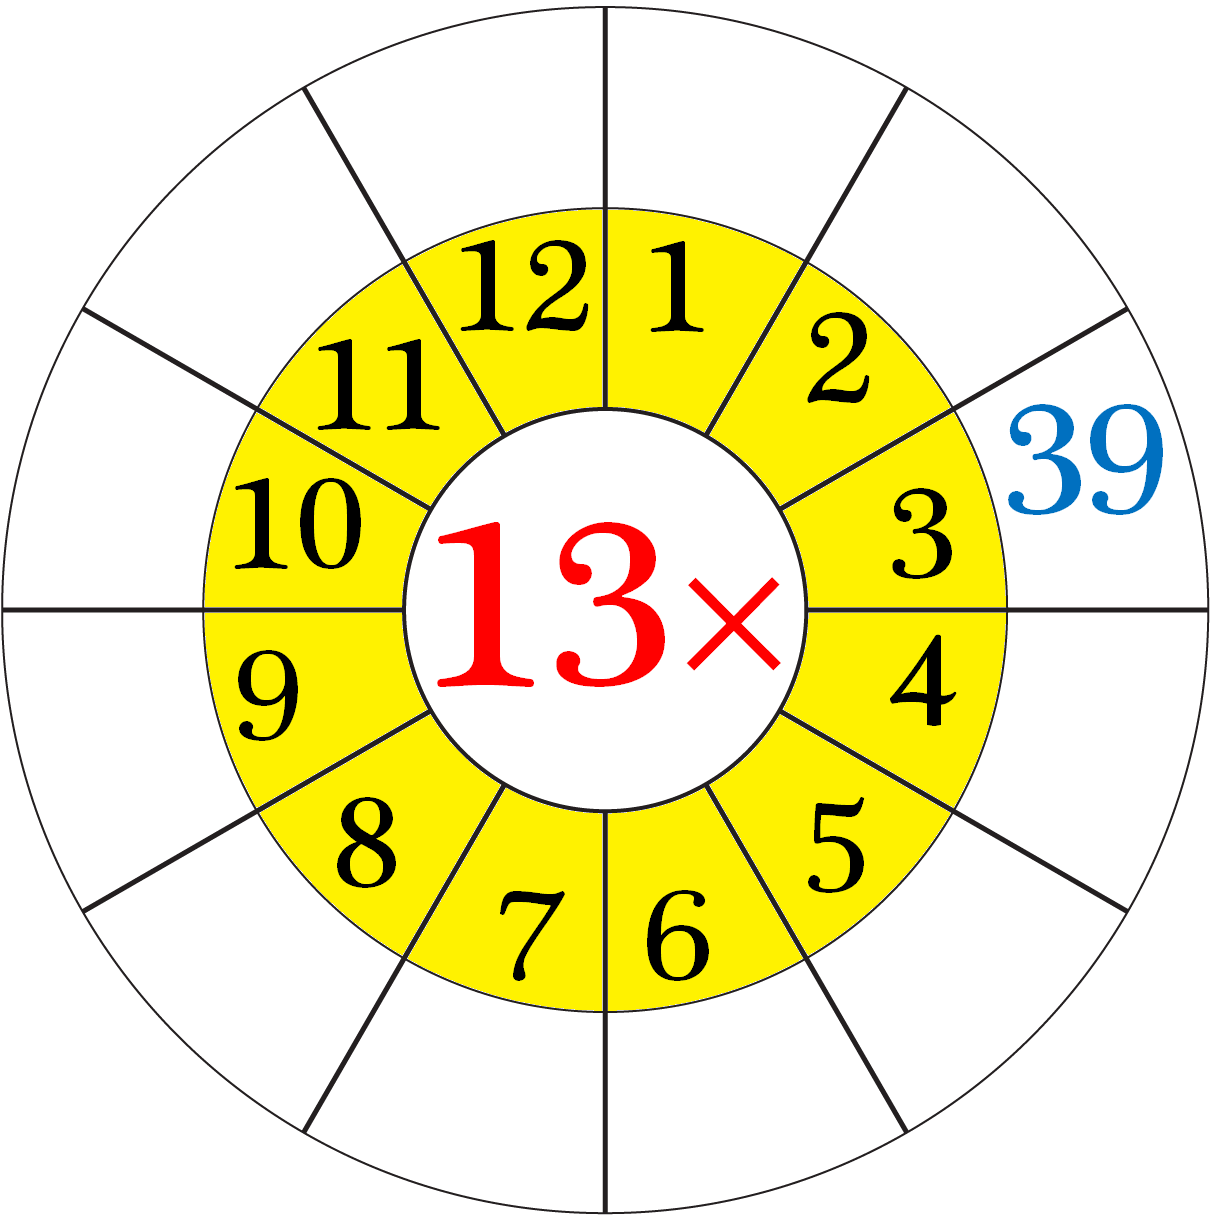 Worksheet on Multiplication Table of 13